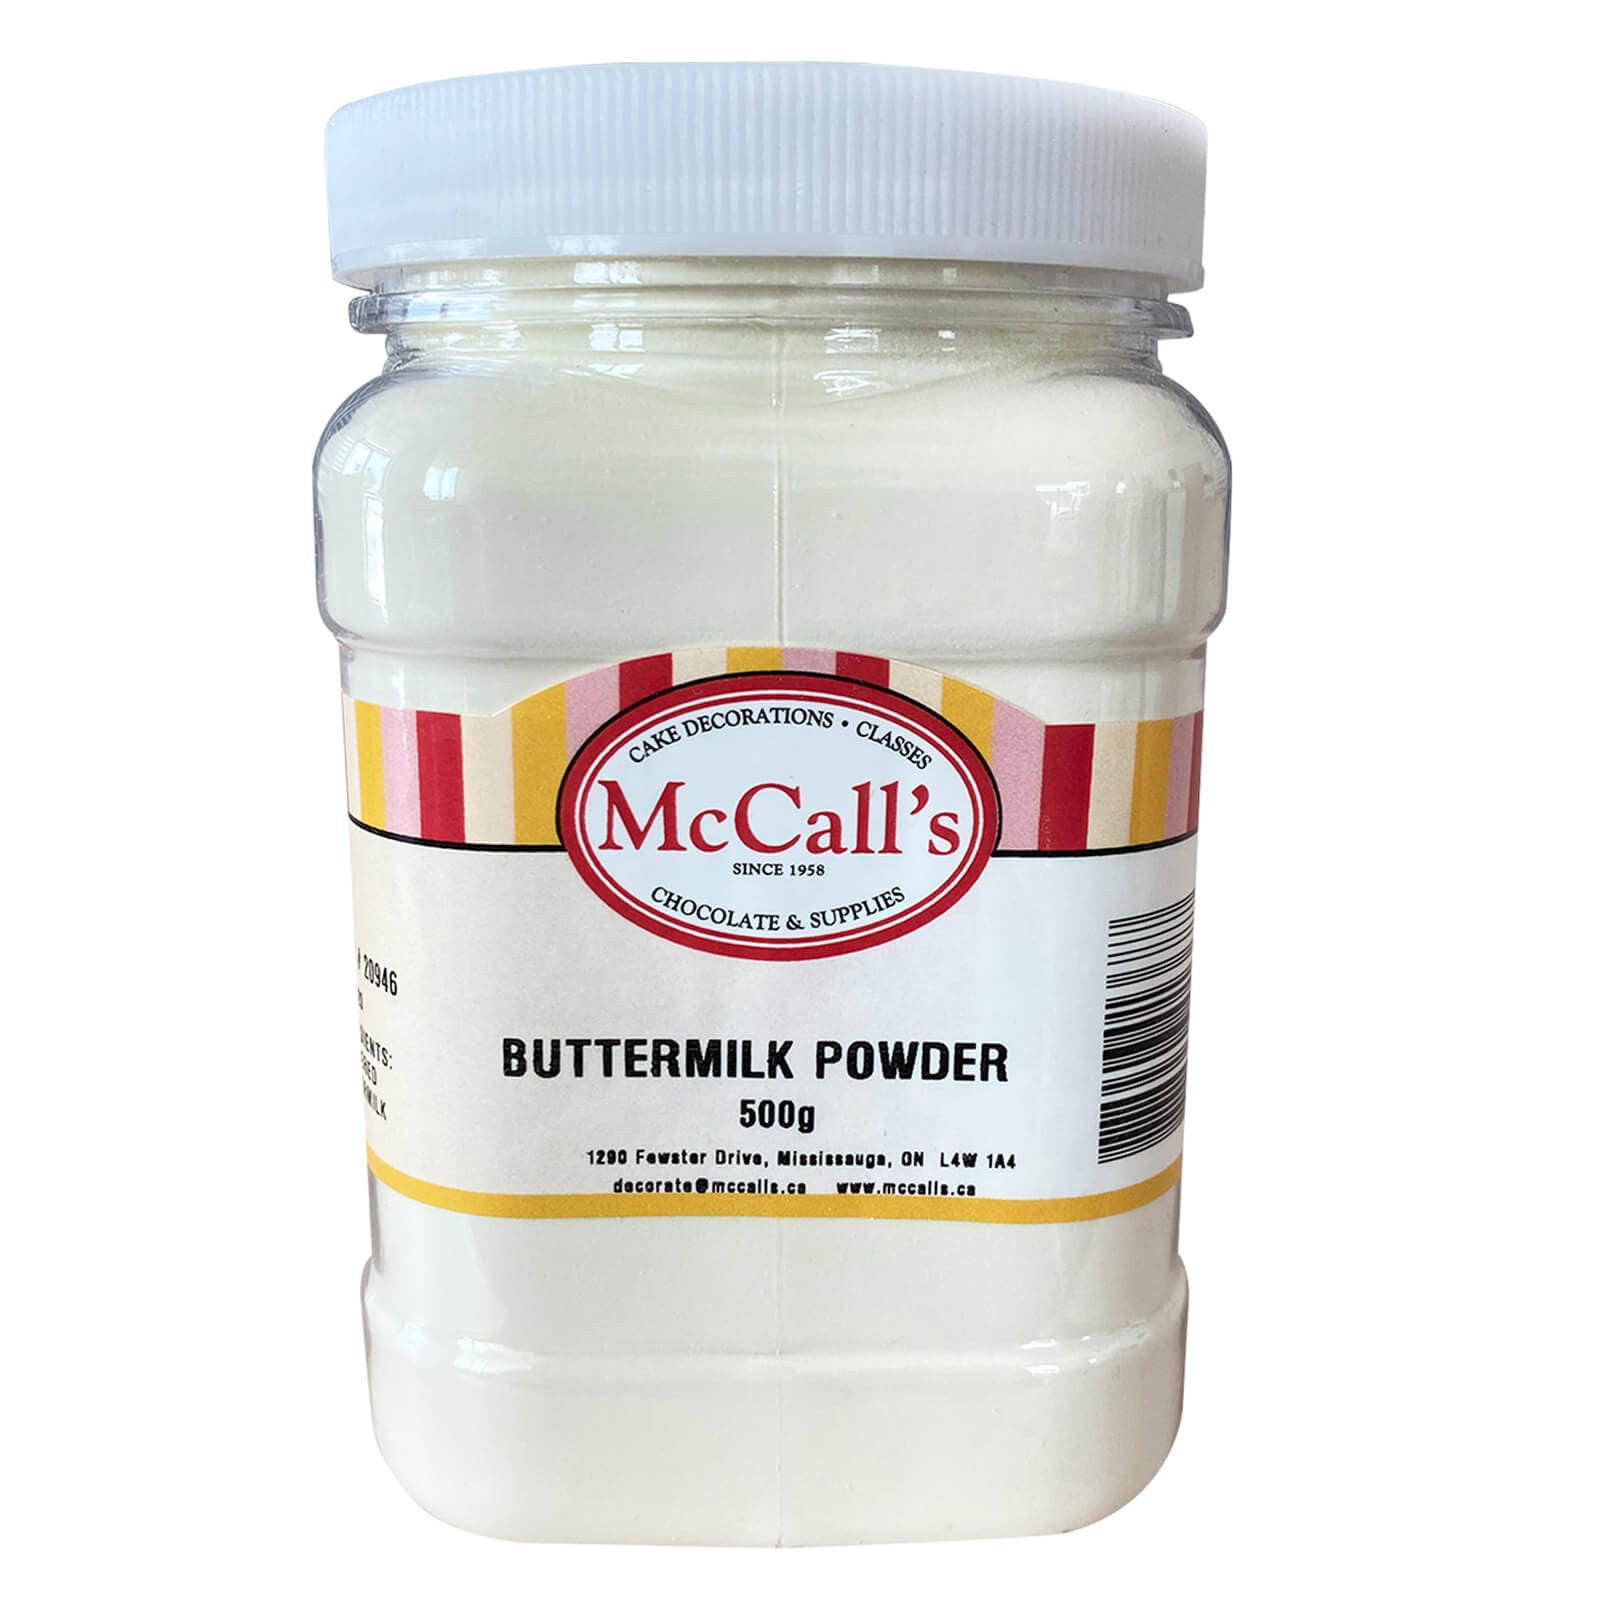 McCall's Buttermilk Powder